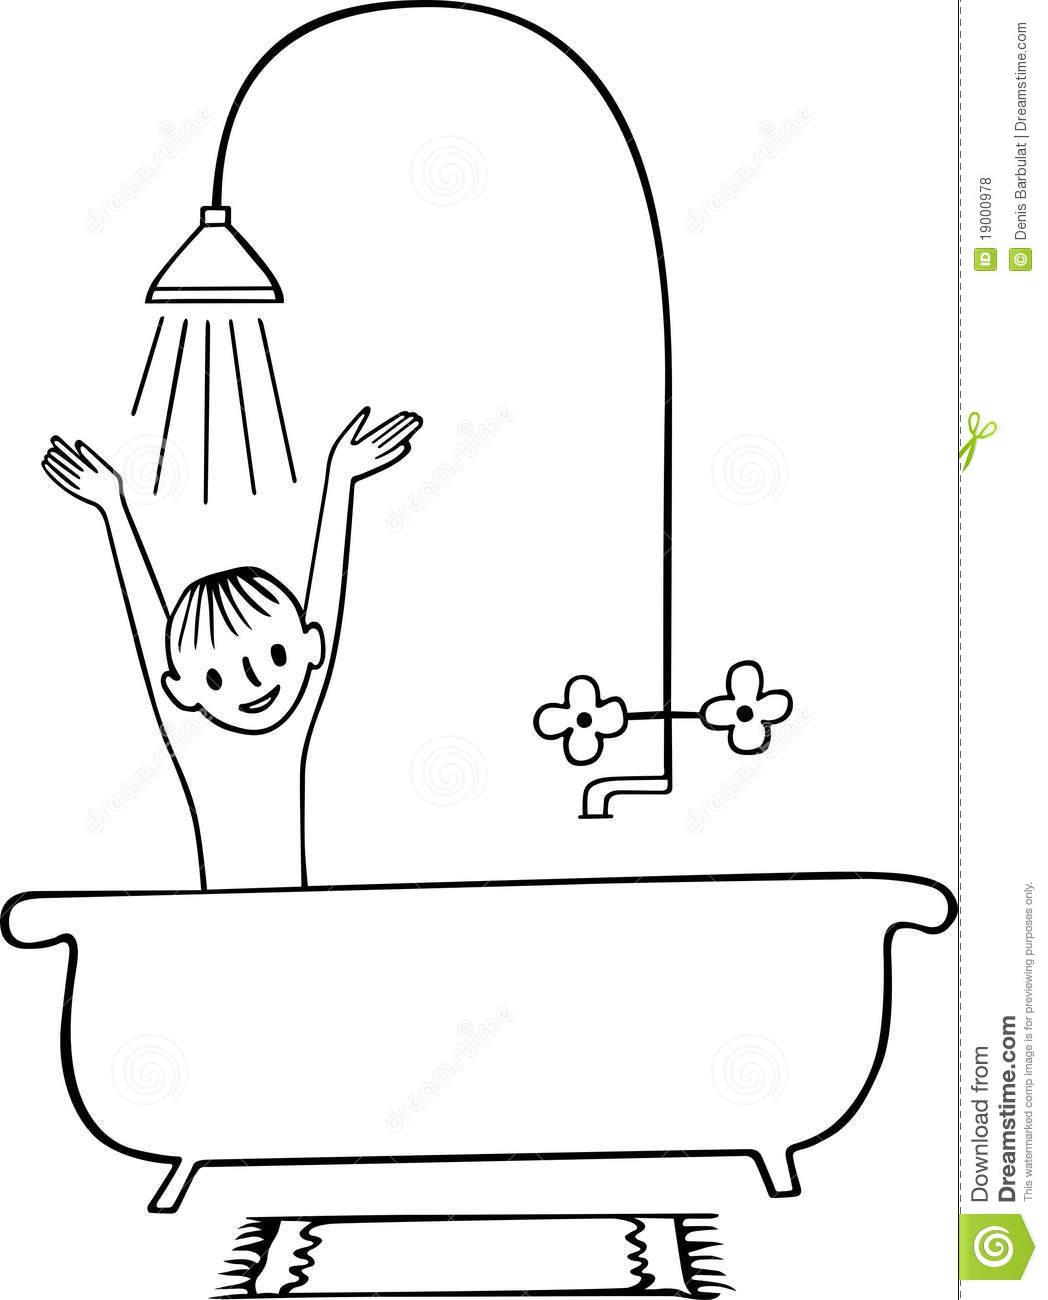 bathtub clipart outline